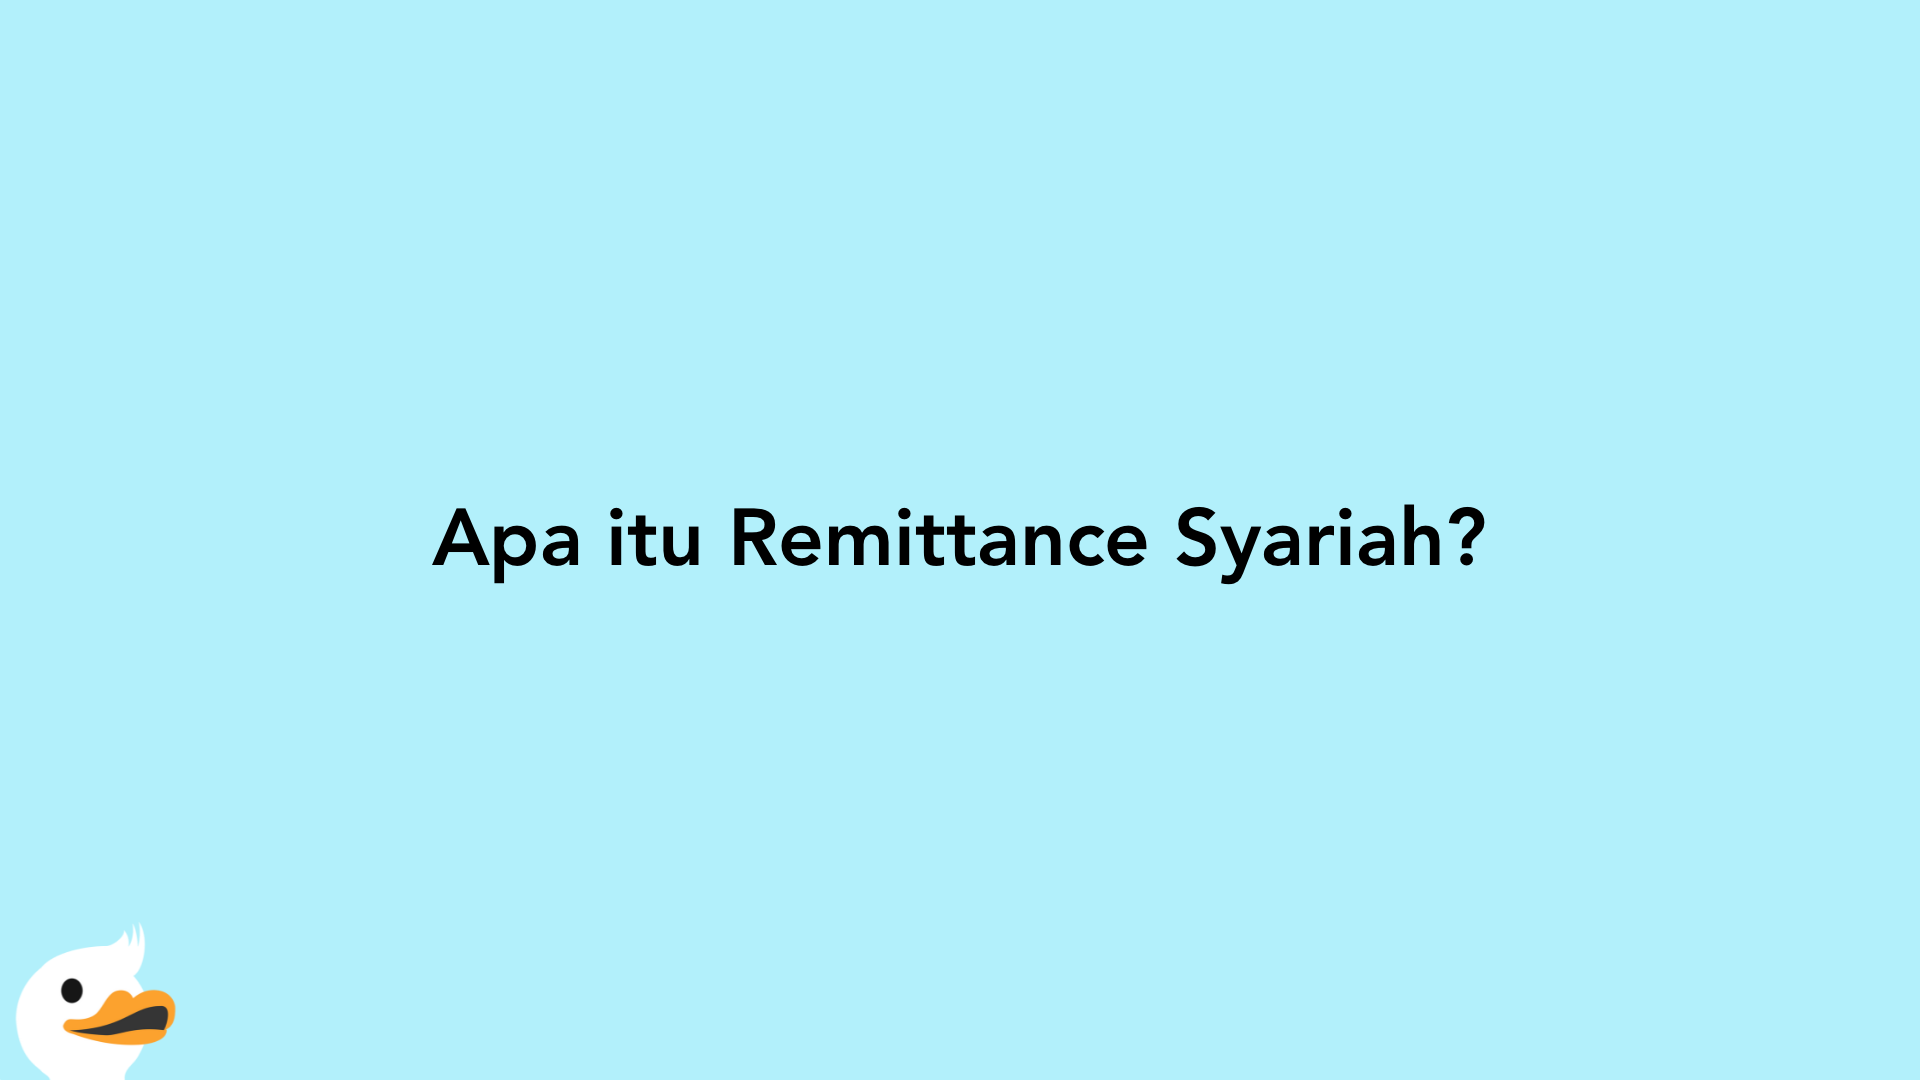 Apa itu Remittance Syariah?